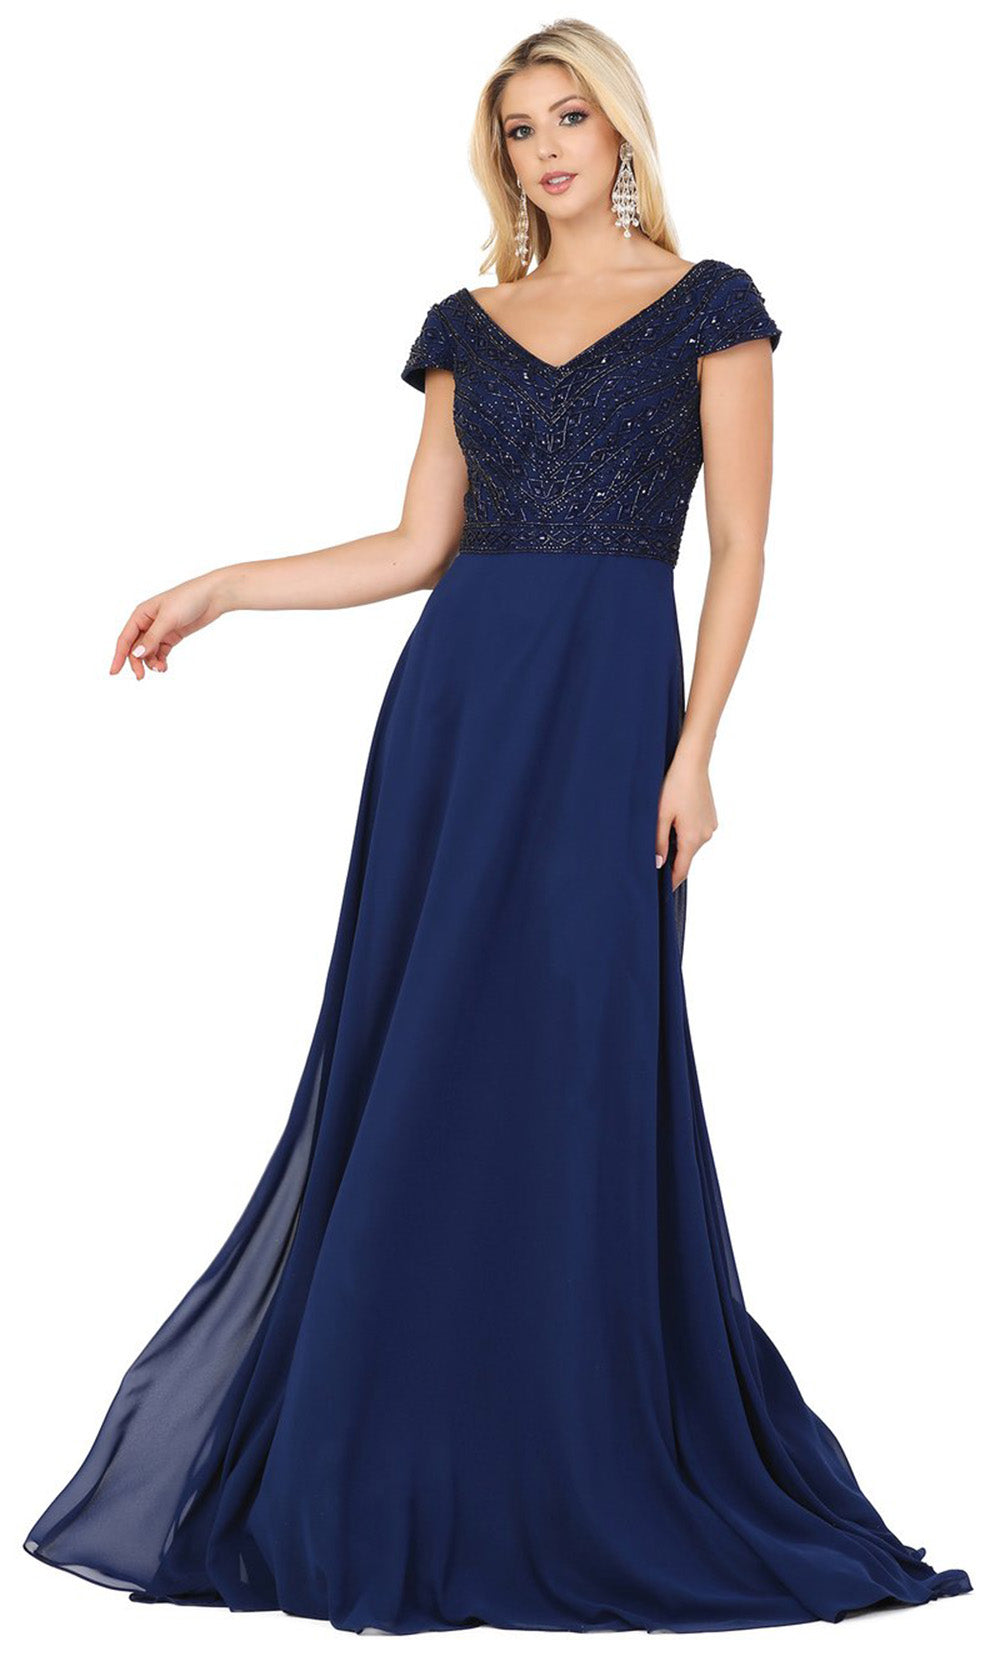 Dancing Queen - 4015 Cap Sleeve Beaded Bodice A-Line Dress In Blue